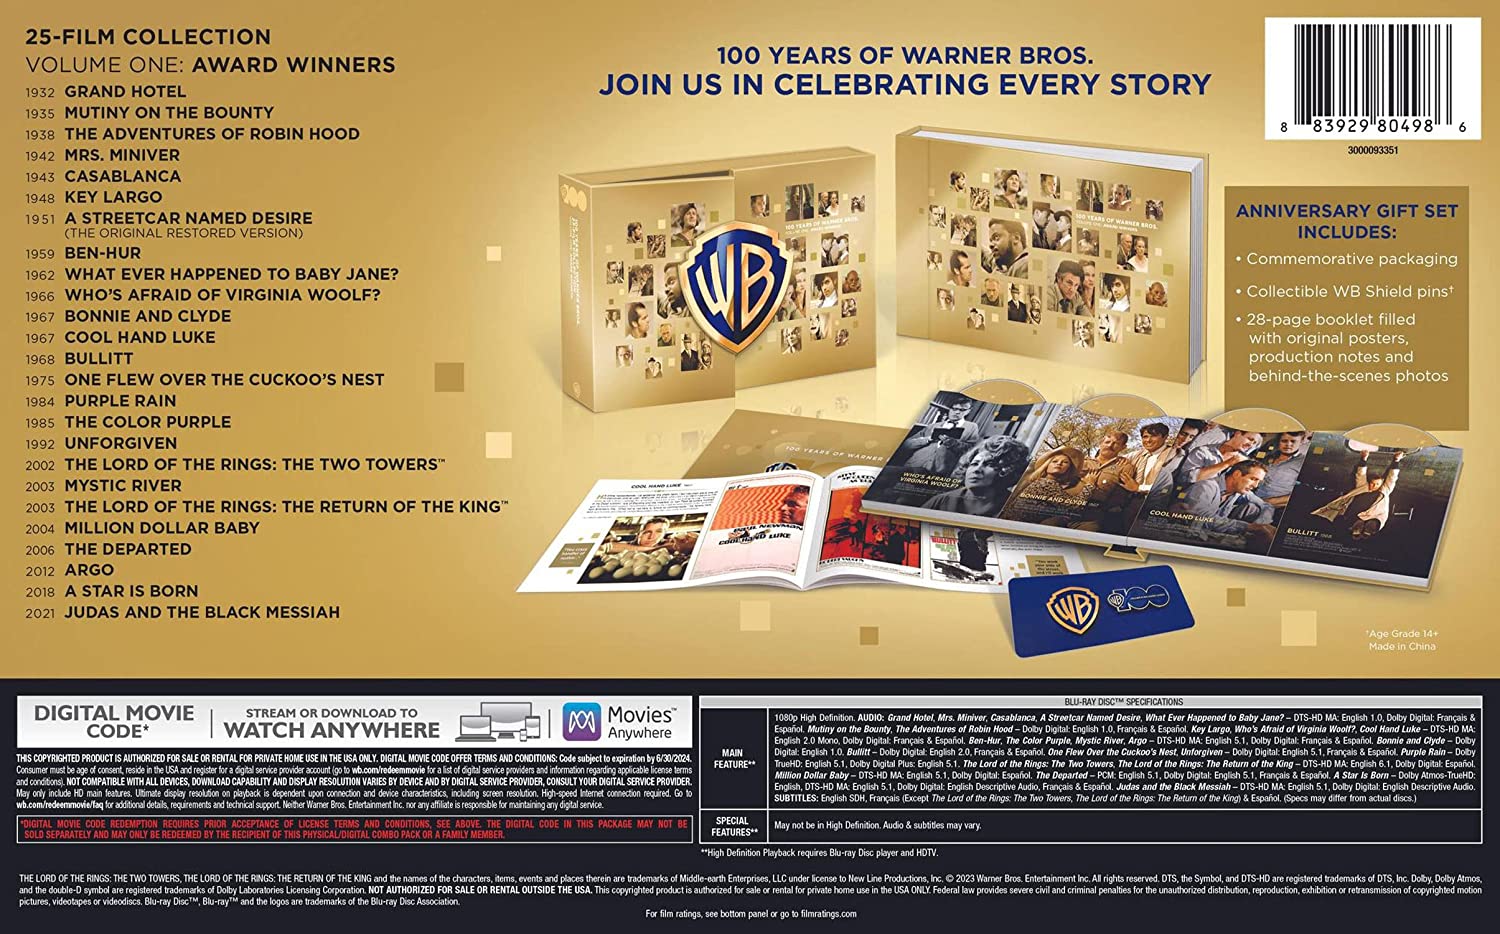 Warner Bros. 100th Anniversary Vol. One Award Winners Blu-ray reverse